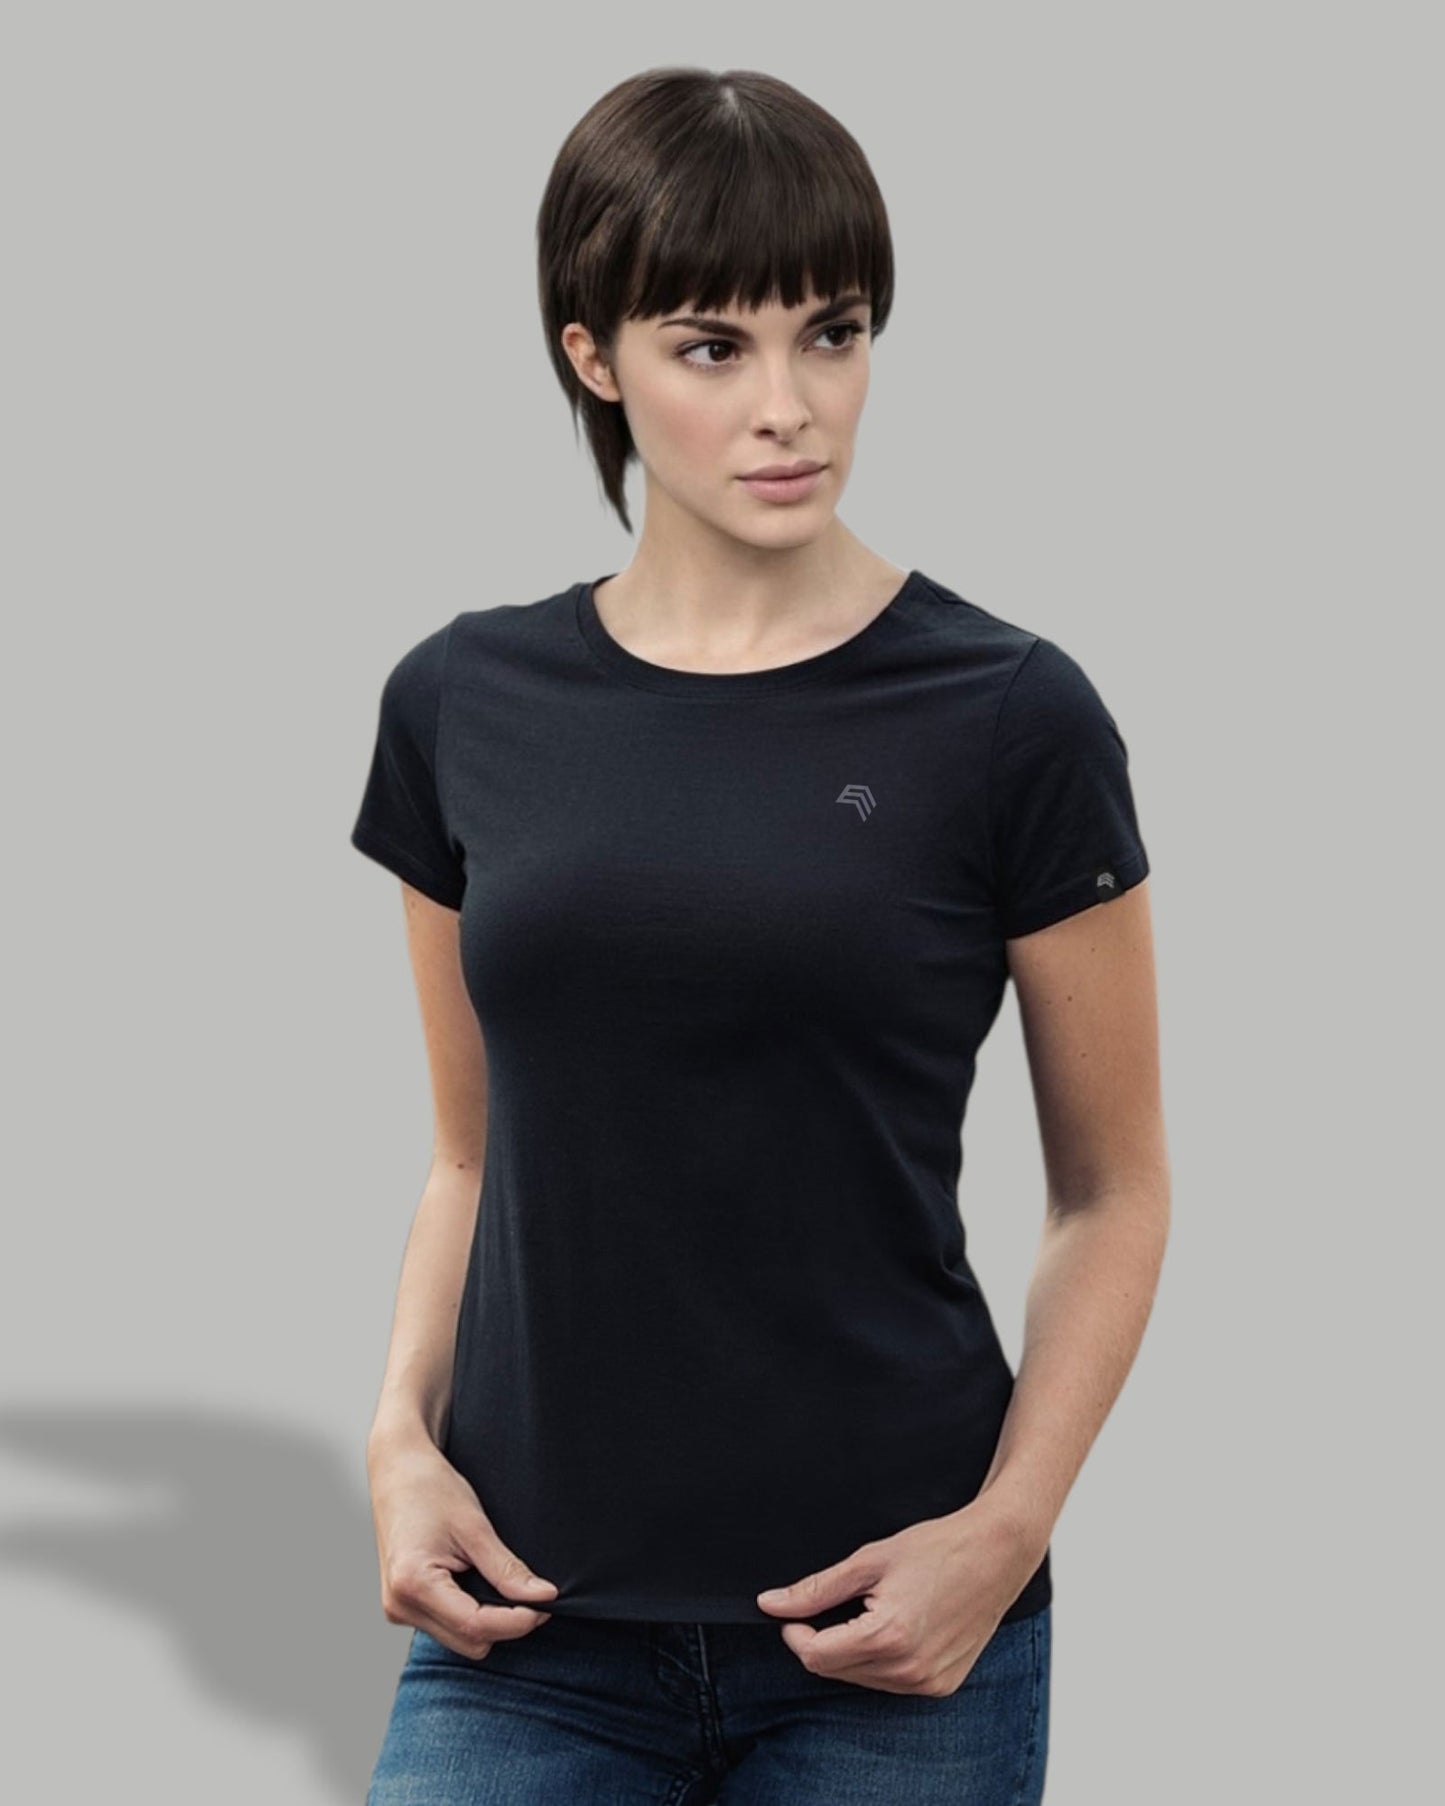 RMH 0201 ― Damen Luxury Bio-Baumwolle T-Shirt - Navy Blau